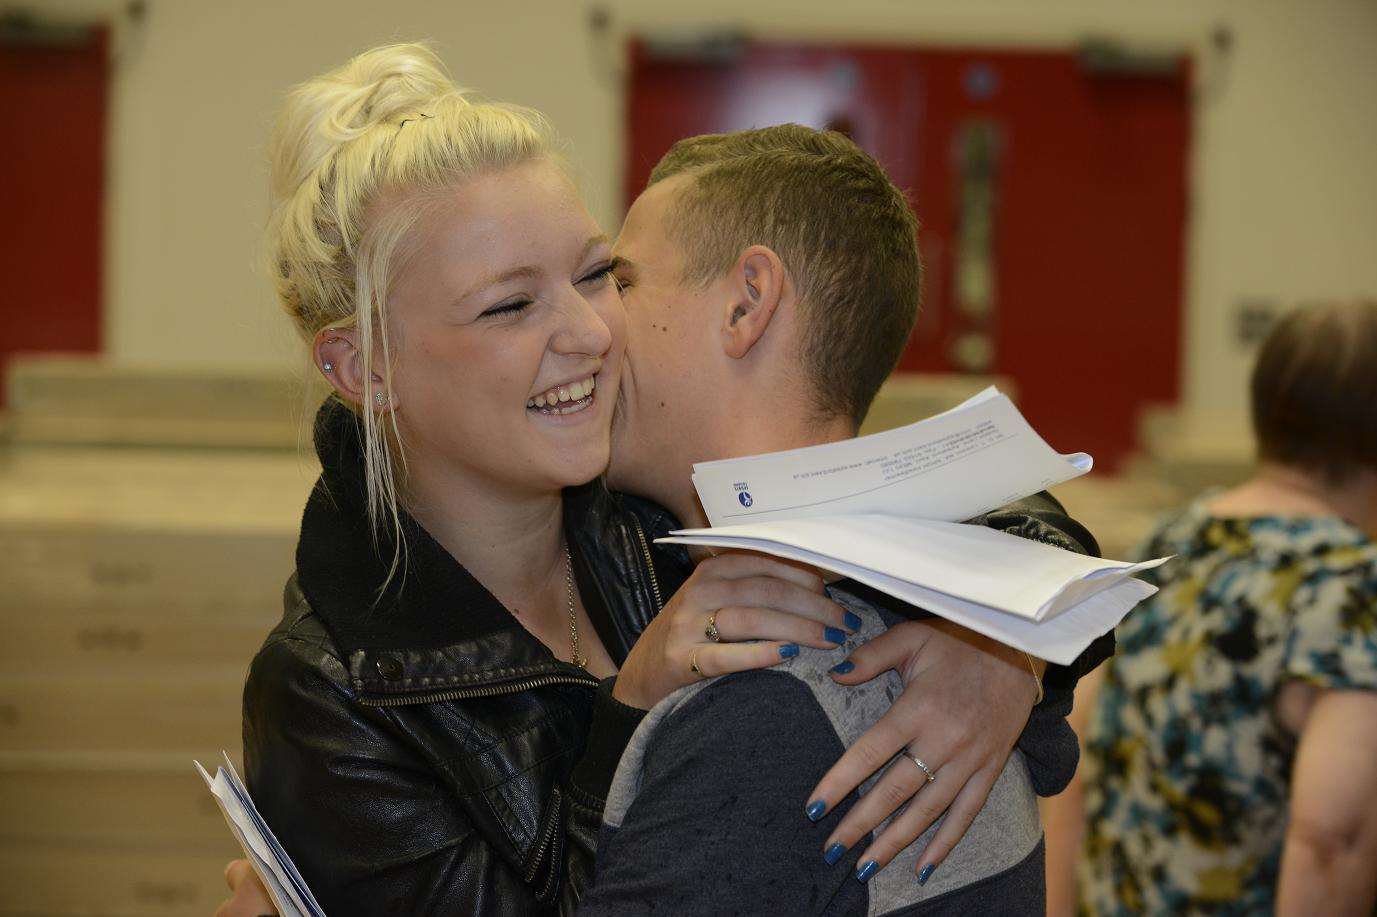 Nicola Watson hugs Tyler Foster at Aylesford school sports college